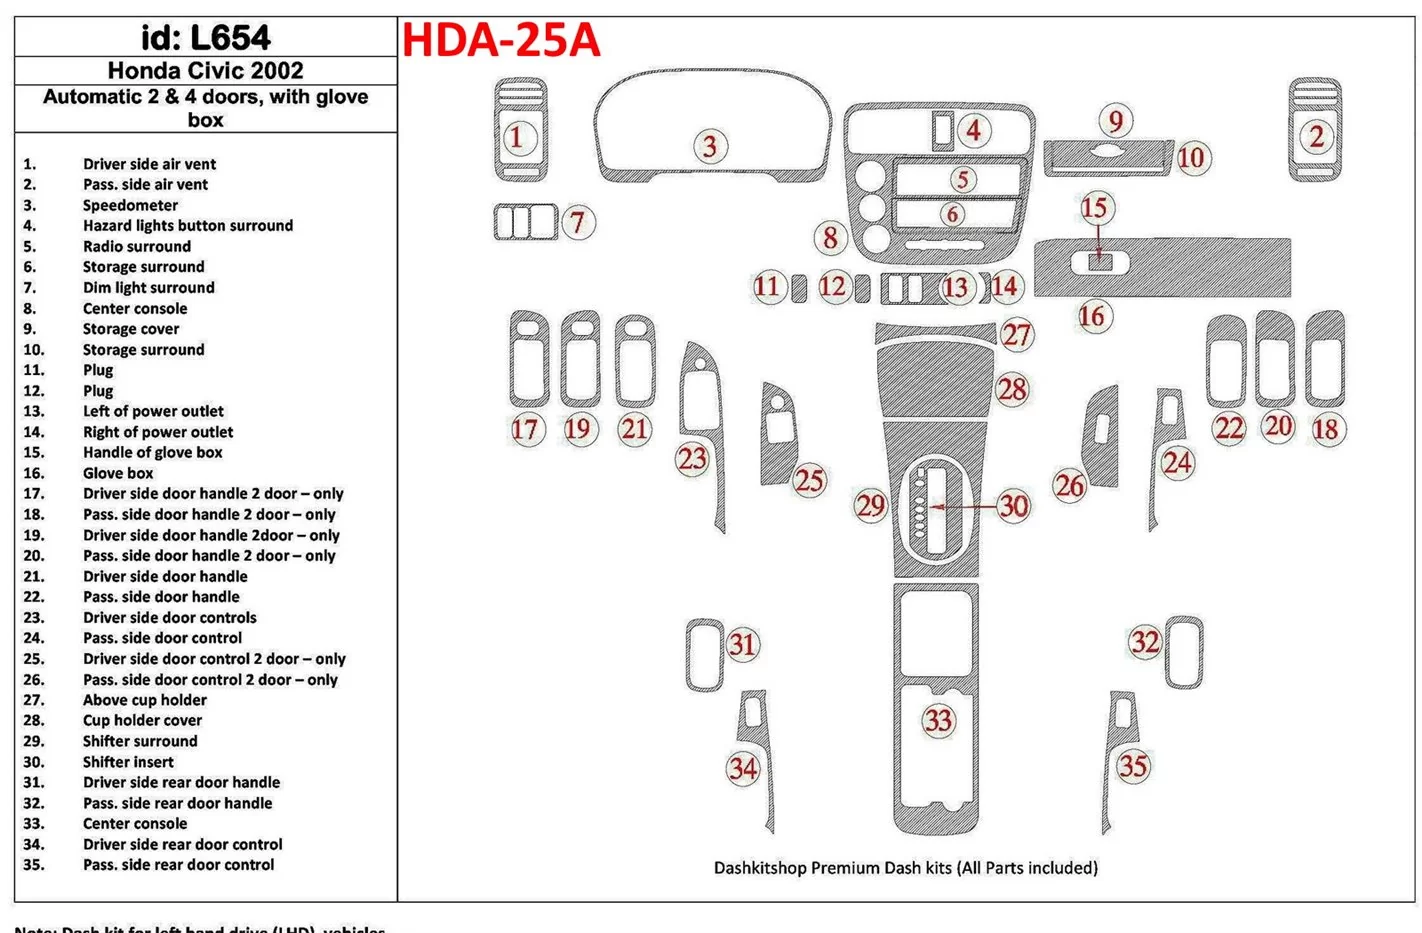 Honda Civic 2002-2002 Automatic Gearbox, 2 or 4 Doors, with glowe-box, 35 Parts set BD innenausstattung armaturendekor cockpit d